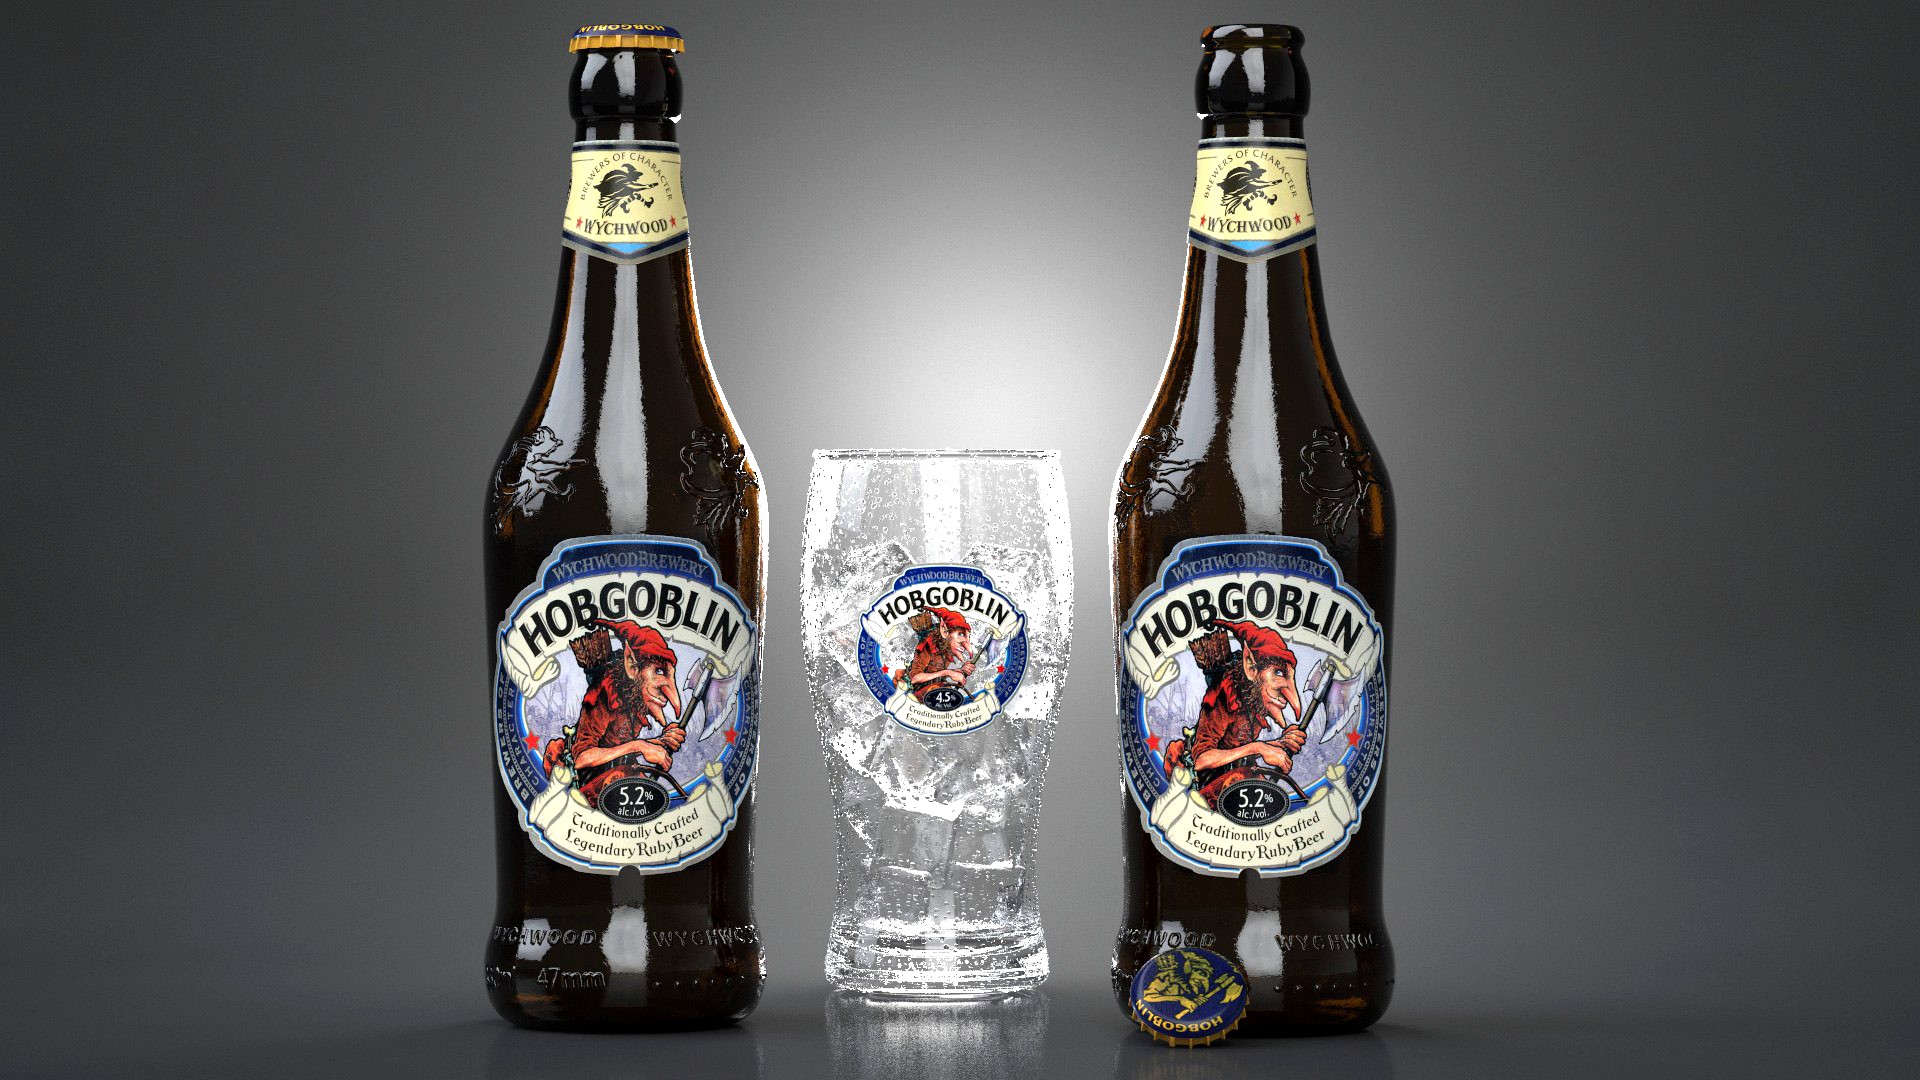 Hobgoblin Regular beer Wychwood Brewery